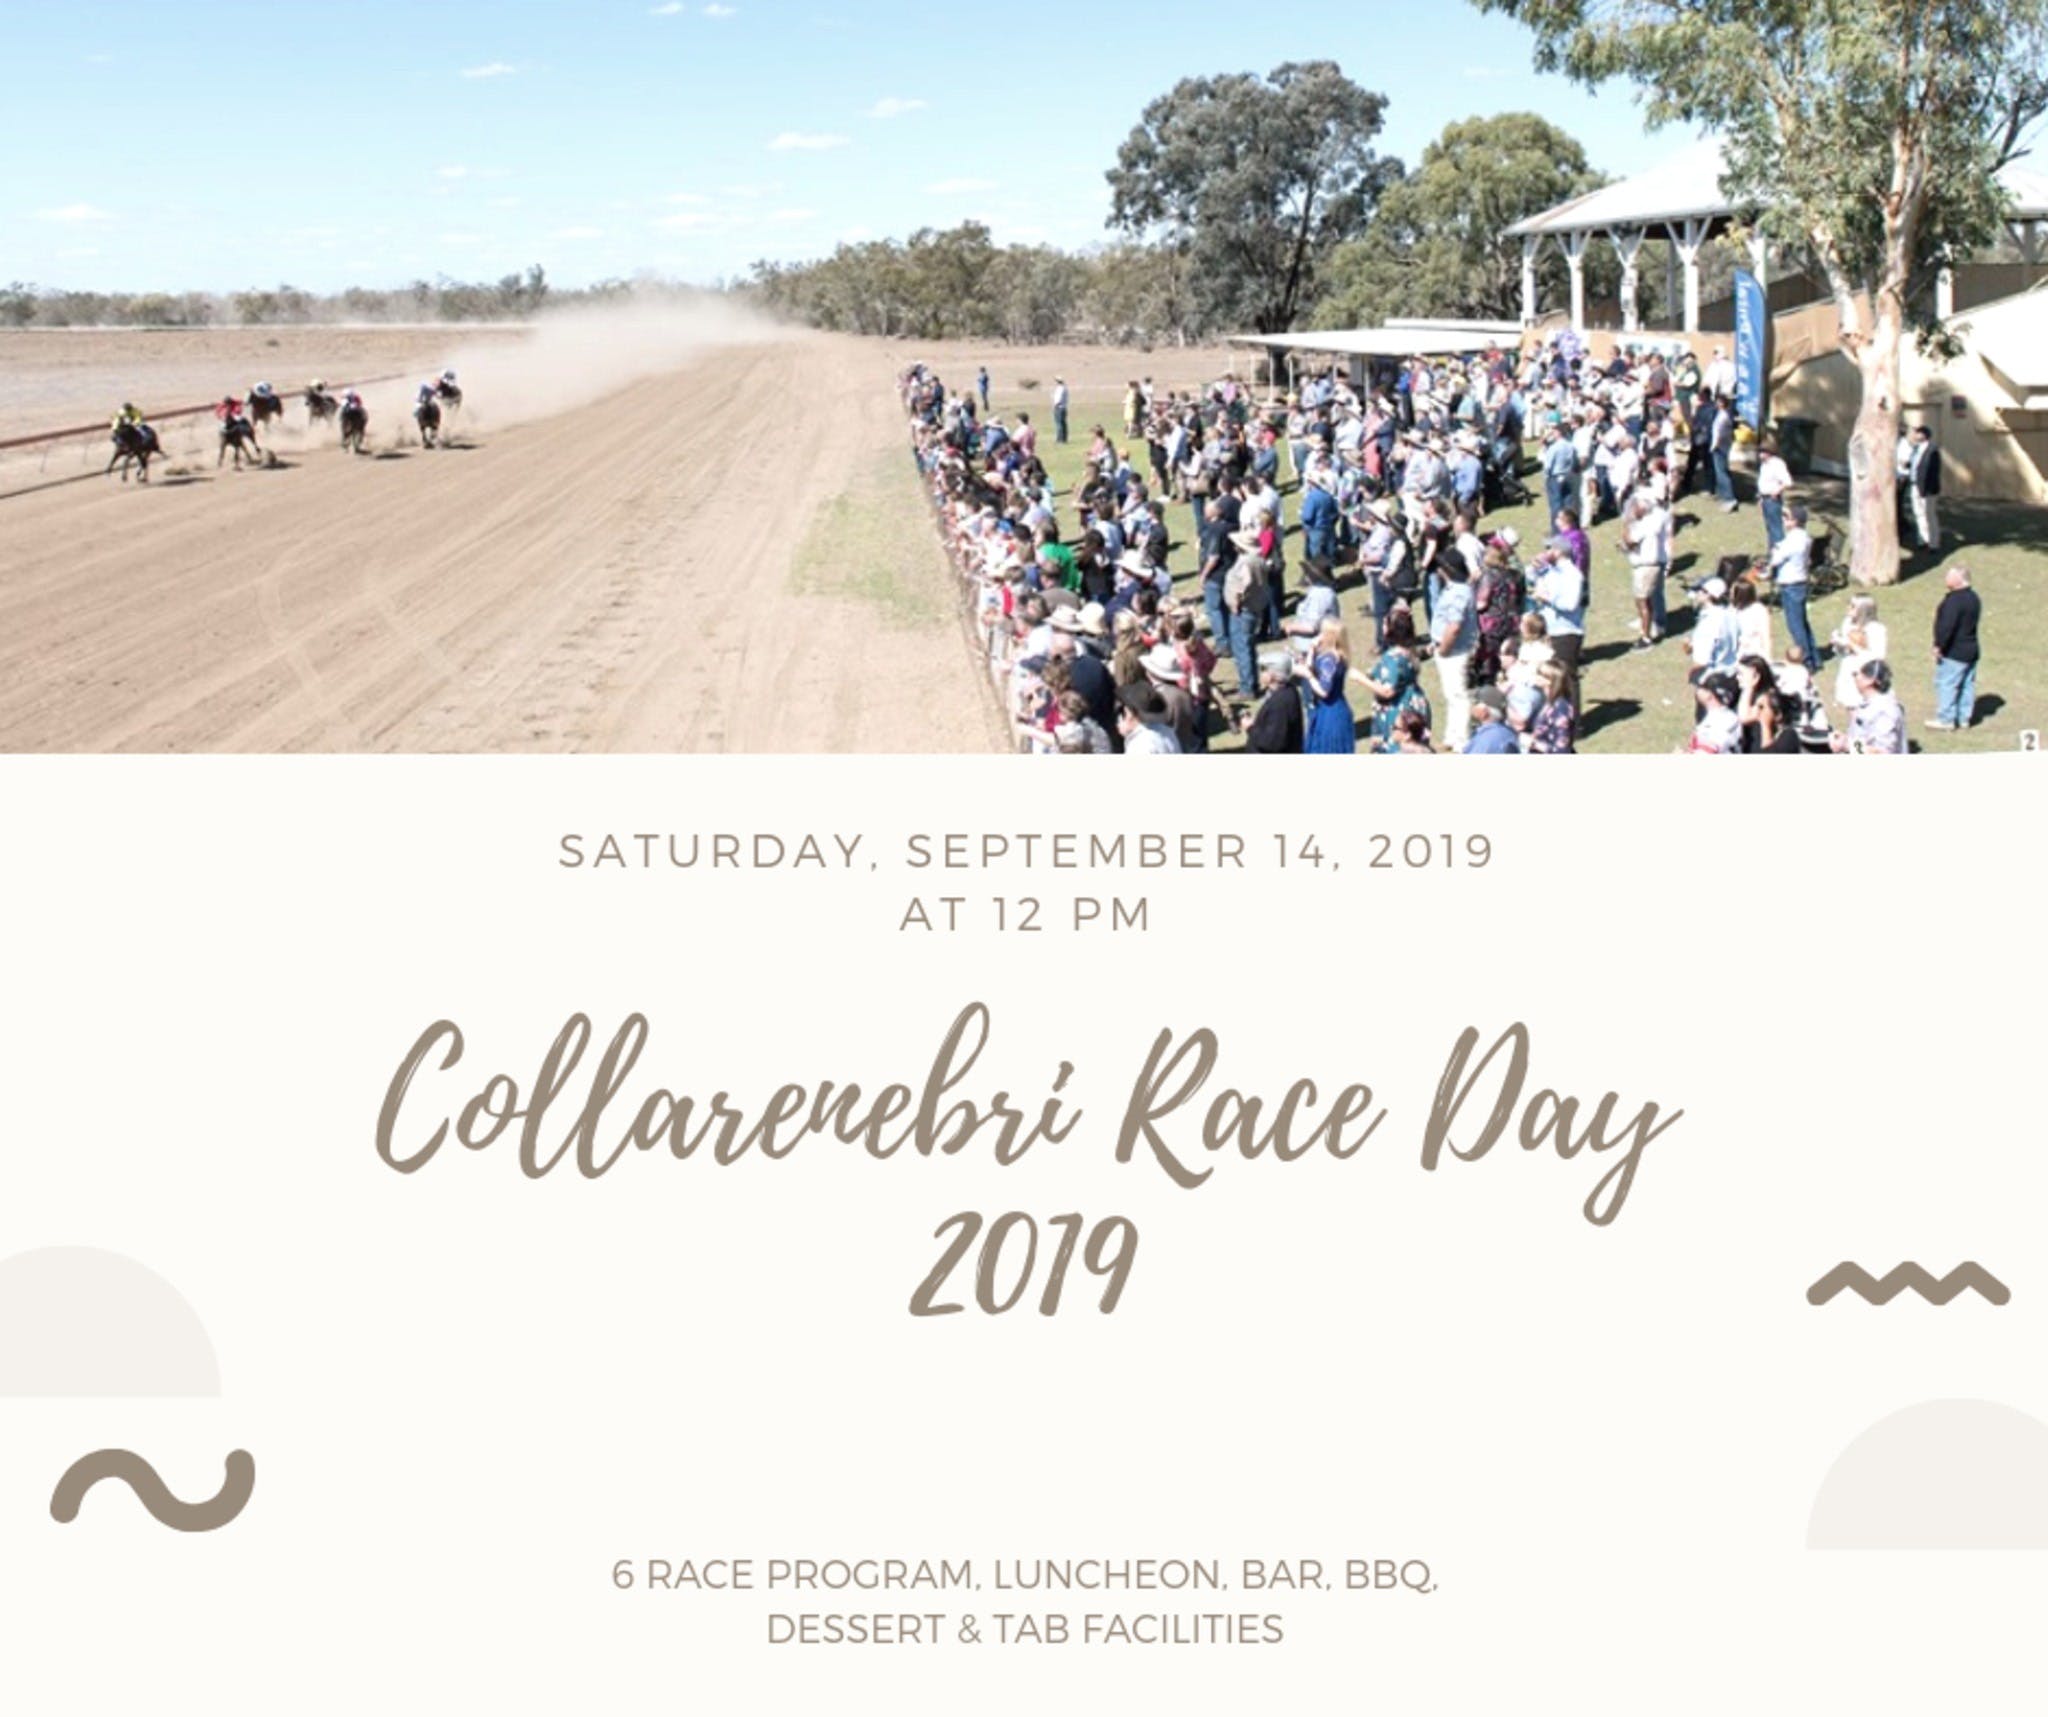 Collarenebri Races - Pubs Sydney